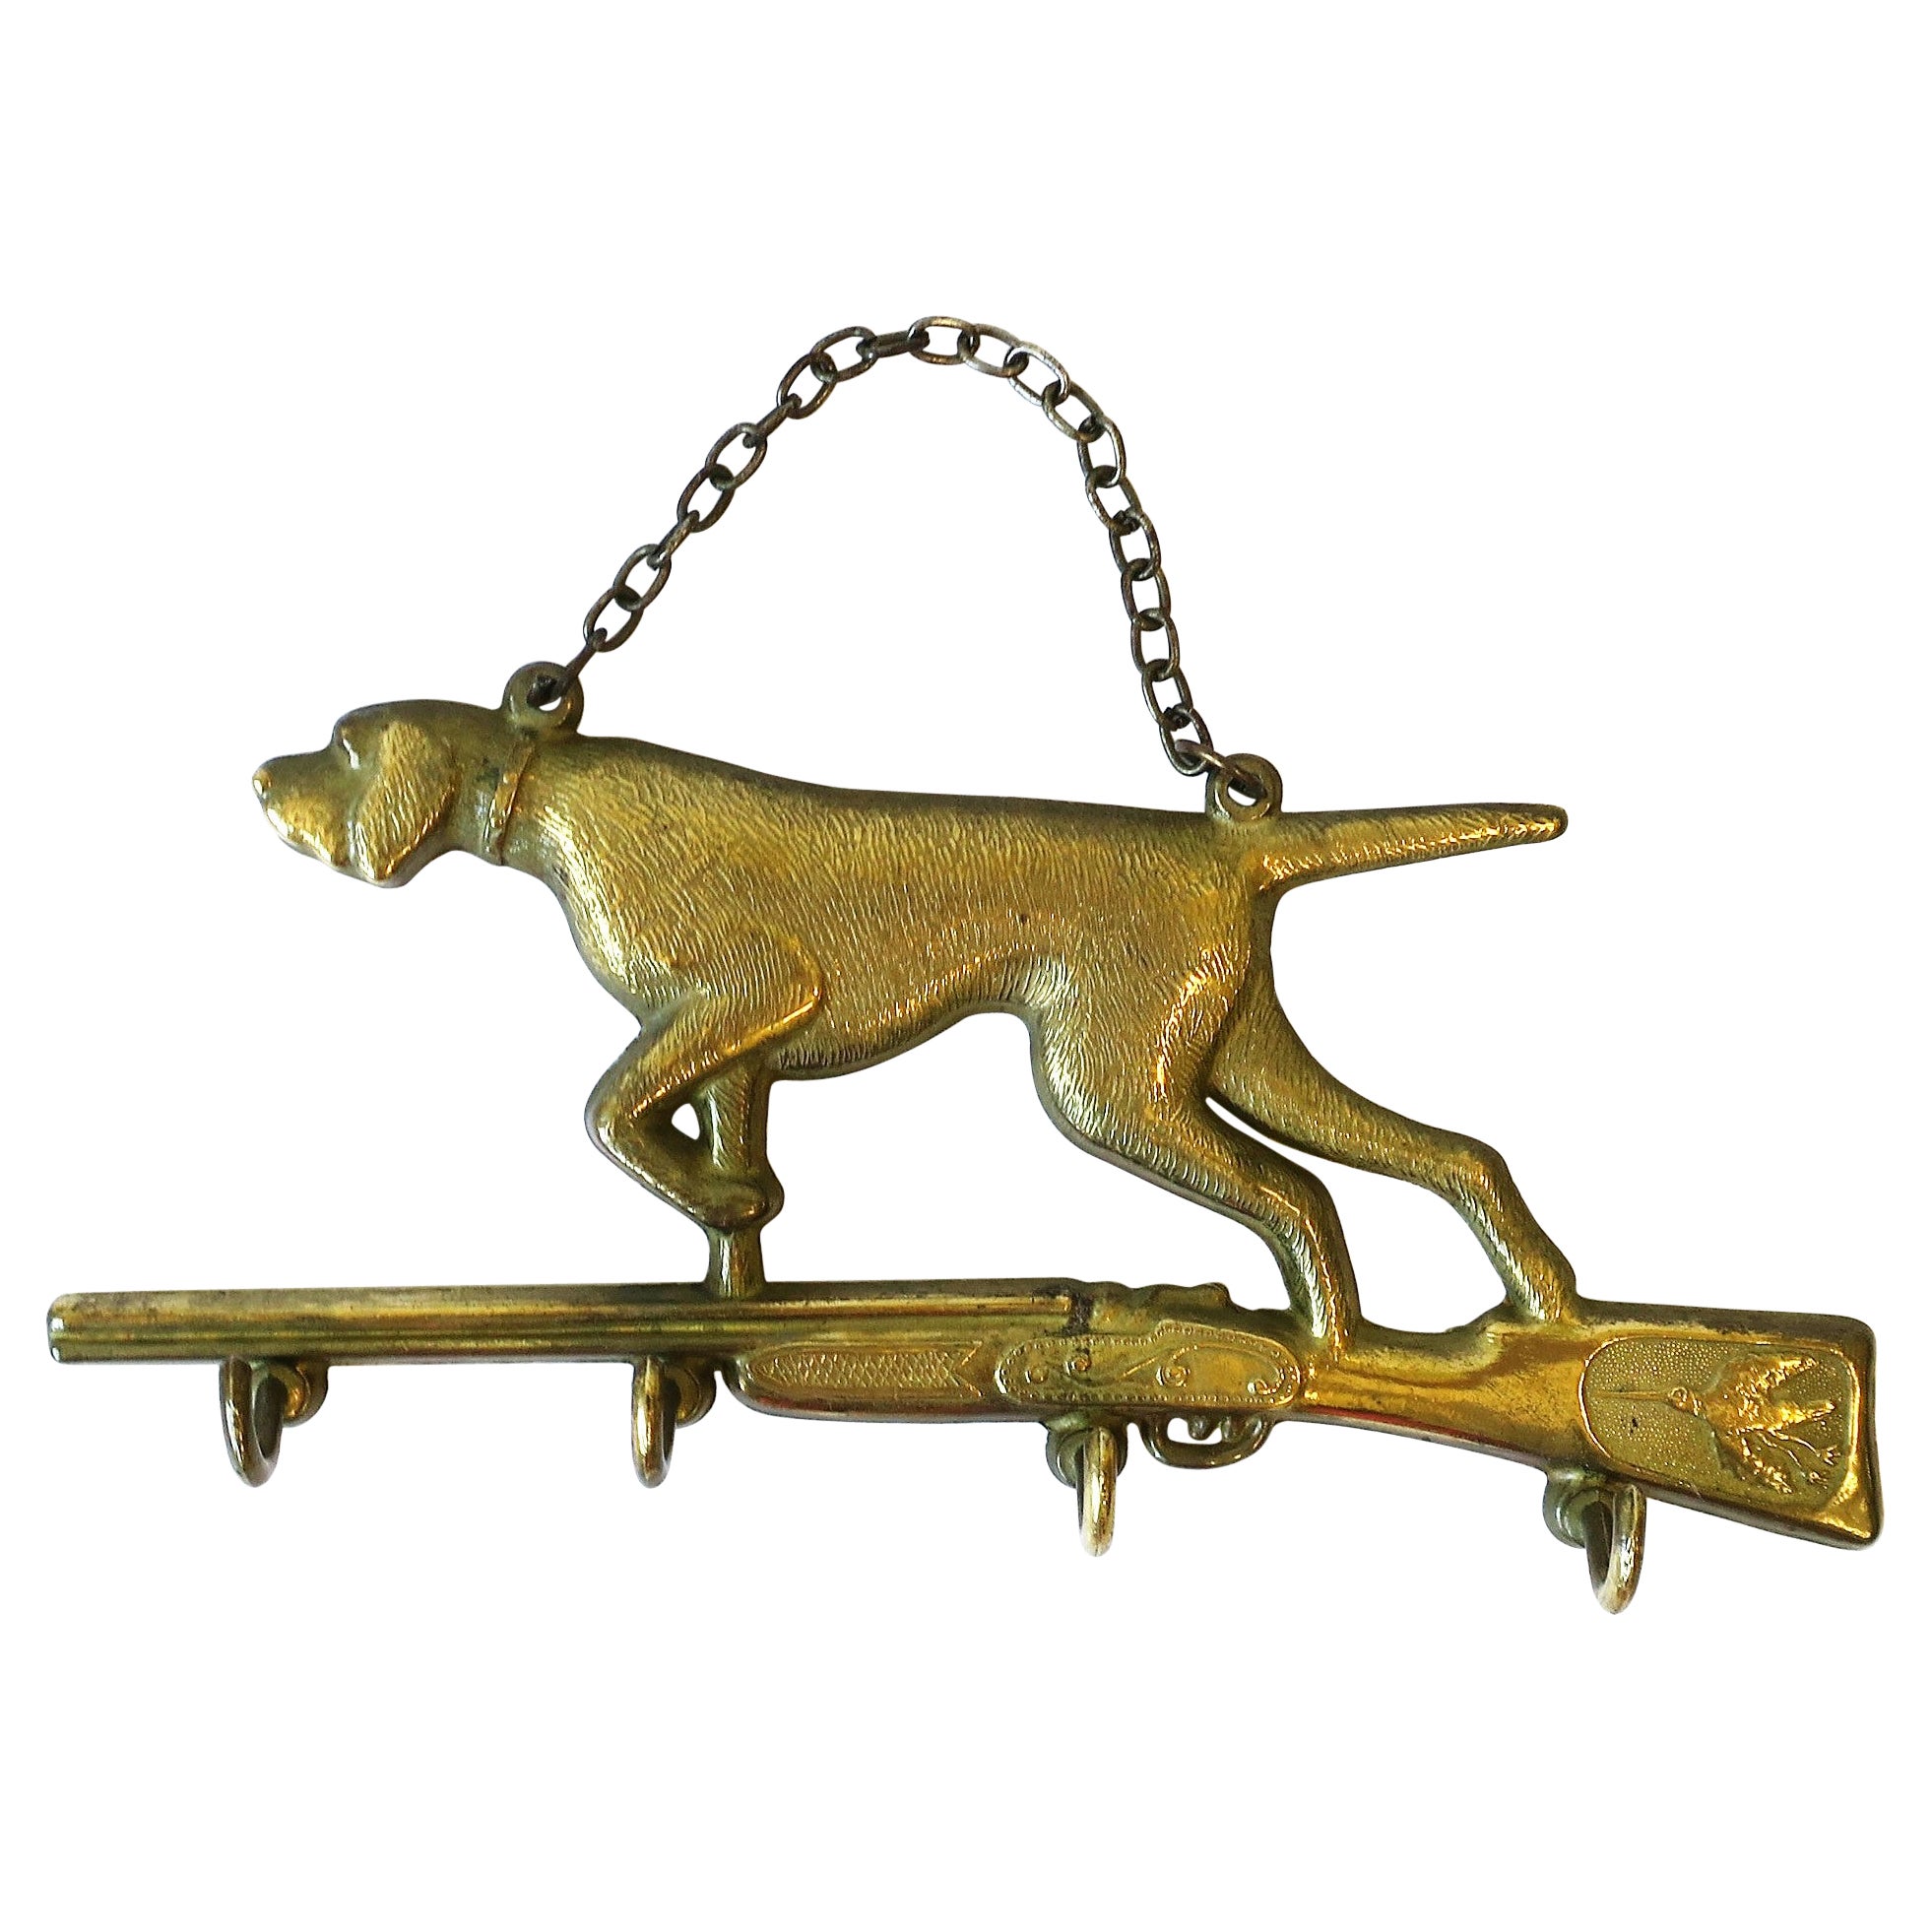 Italian Brass Hunting Dog and Rifle Wall Key Hook Holder